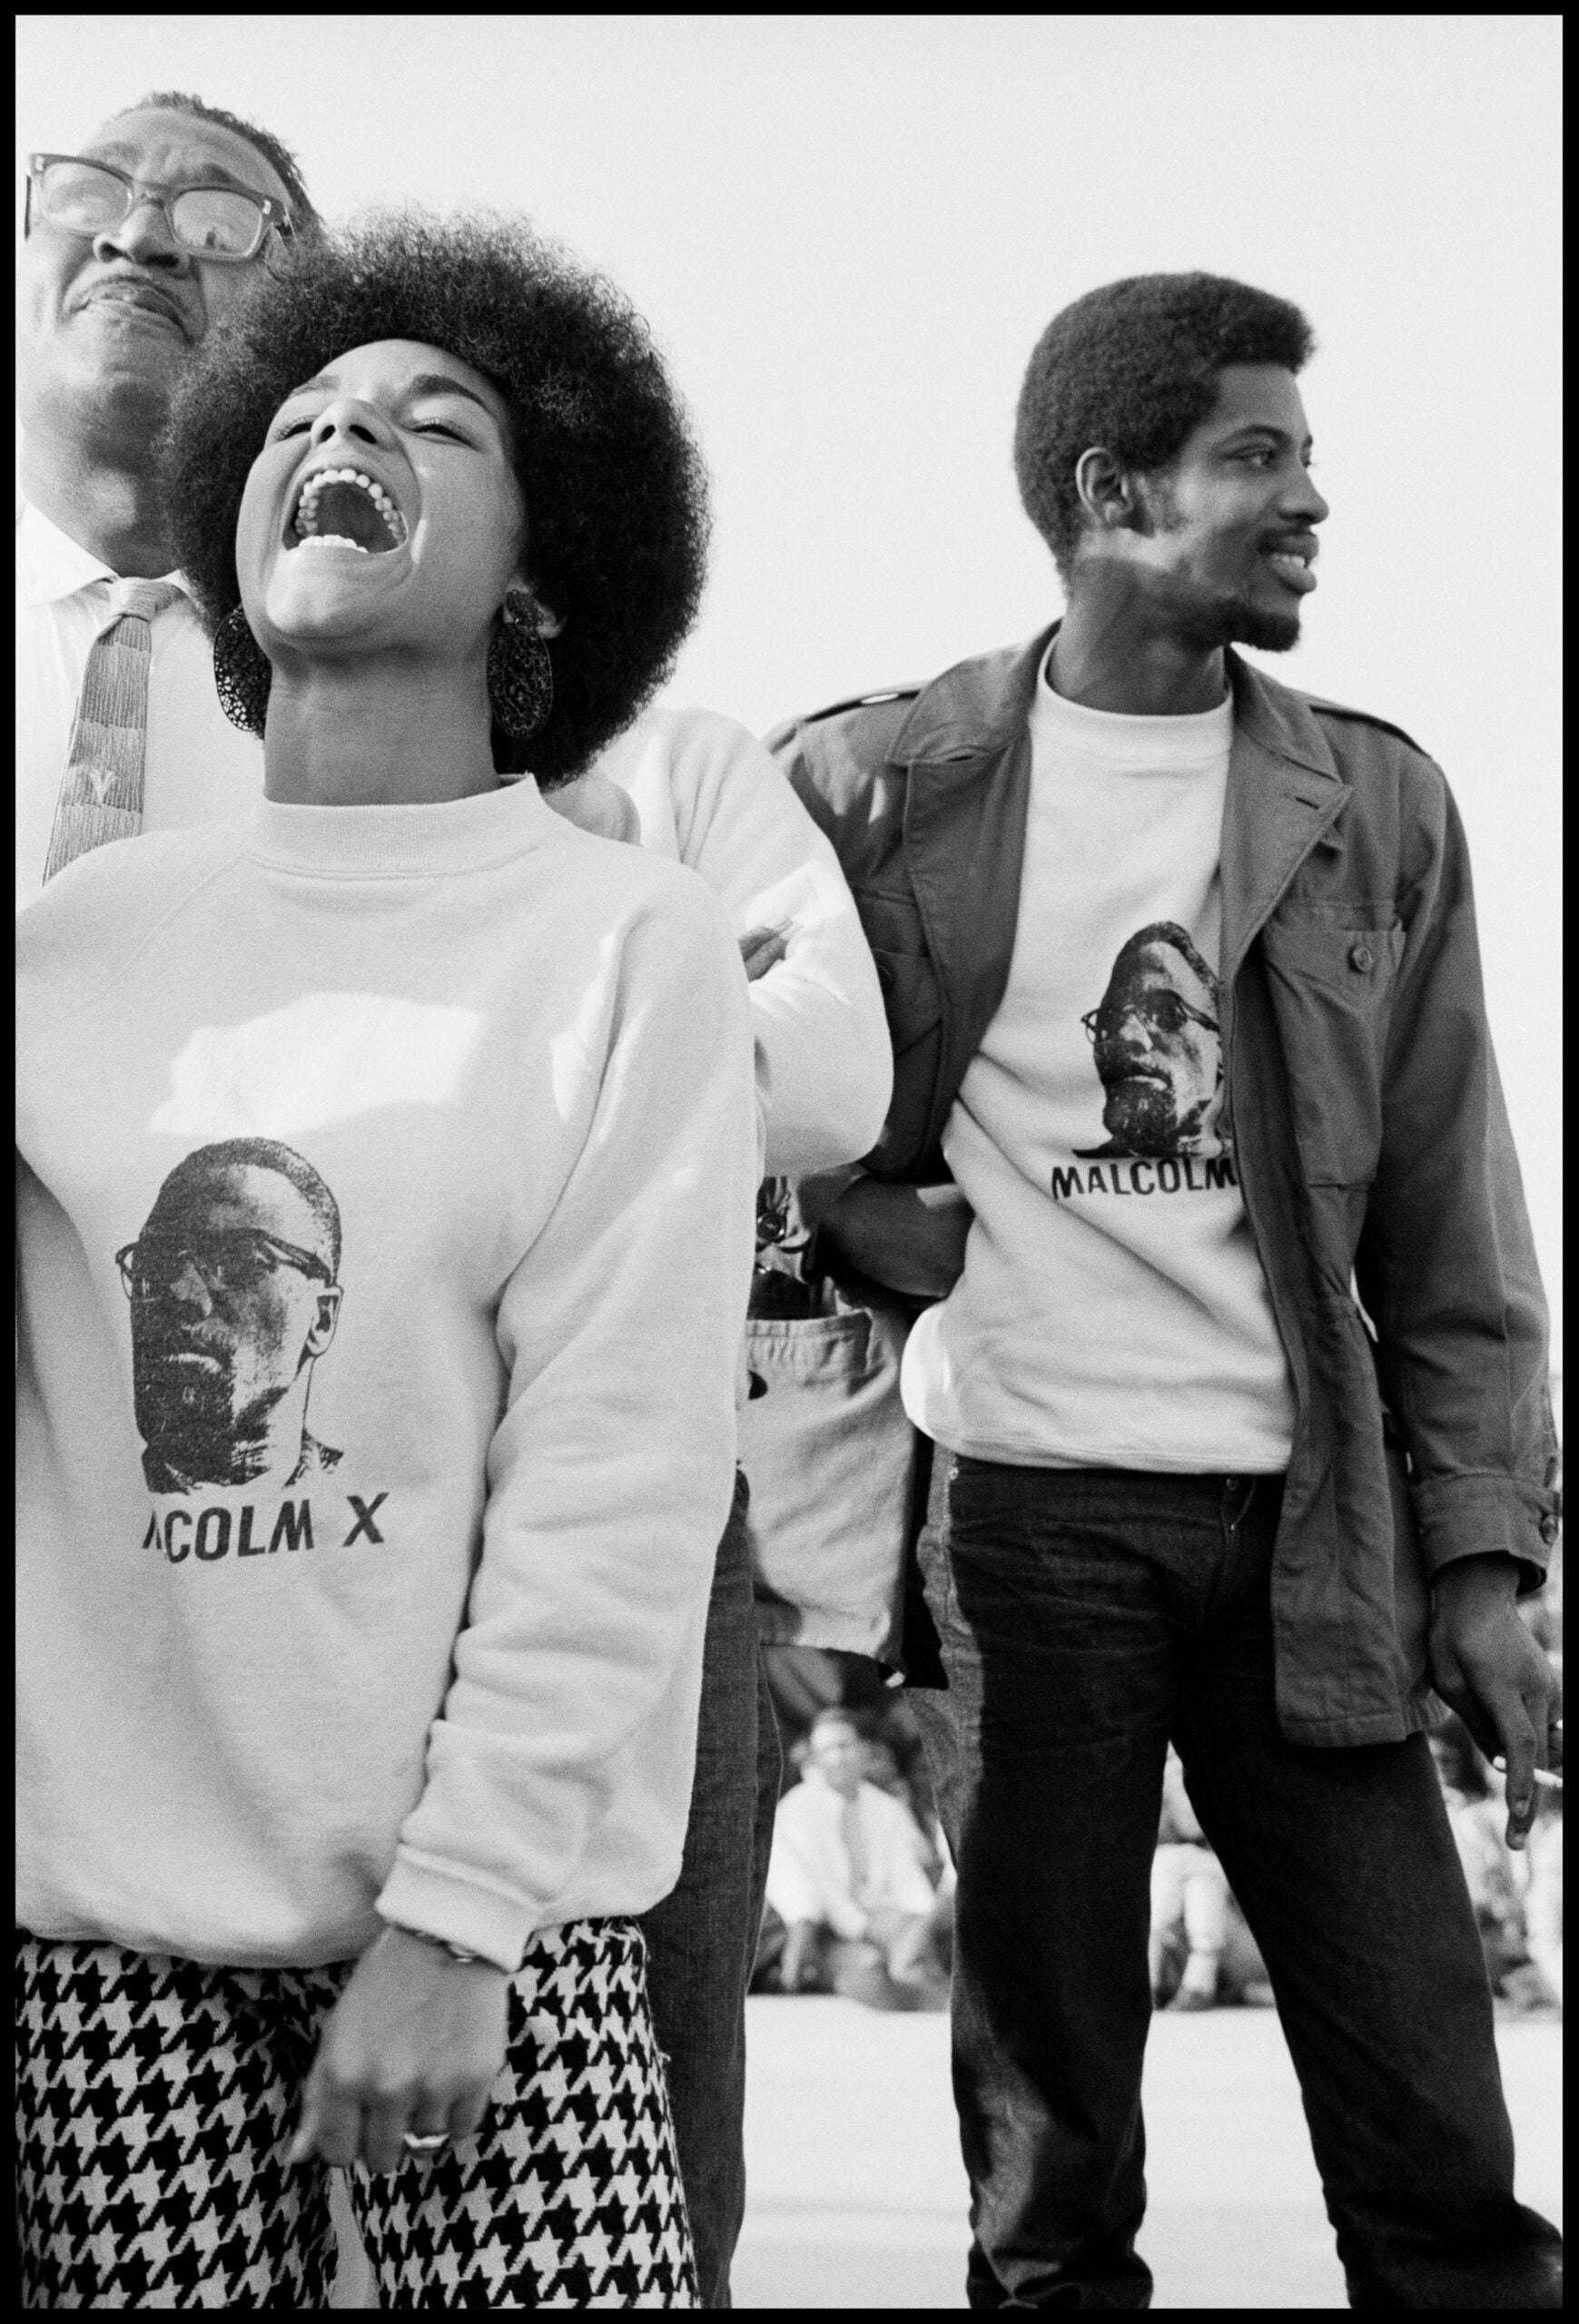 Three people wearing Malcolm X shirts